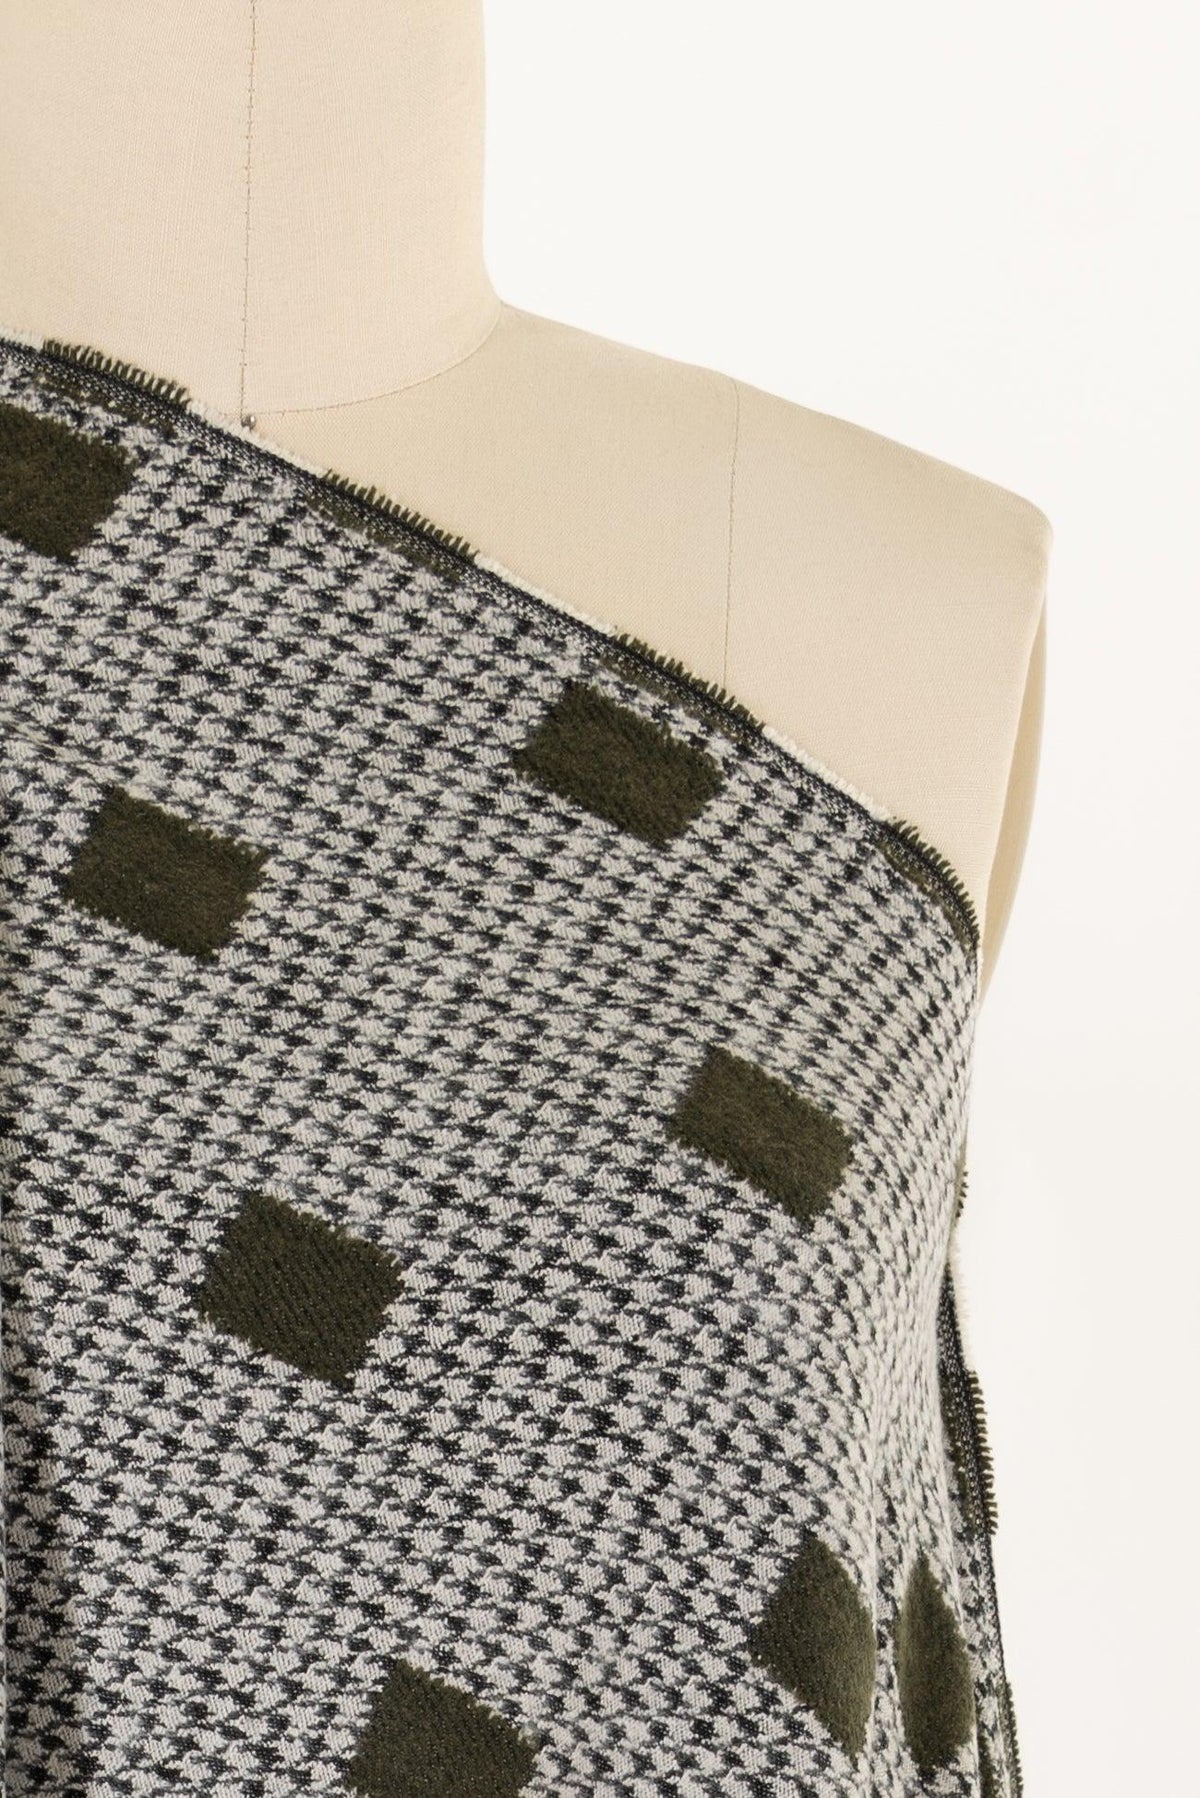 Ferdy Check Jacquard Woven - Marcy Tilton Fabrics